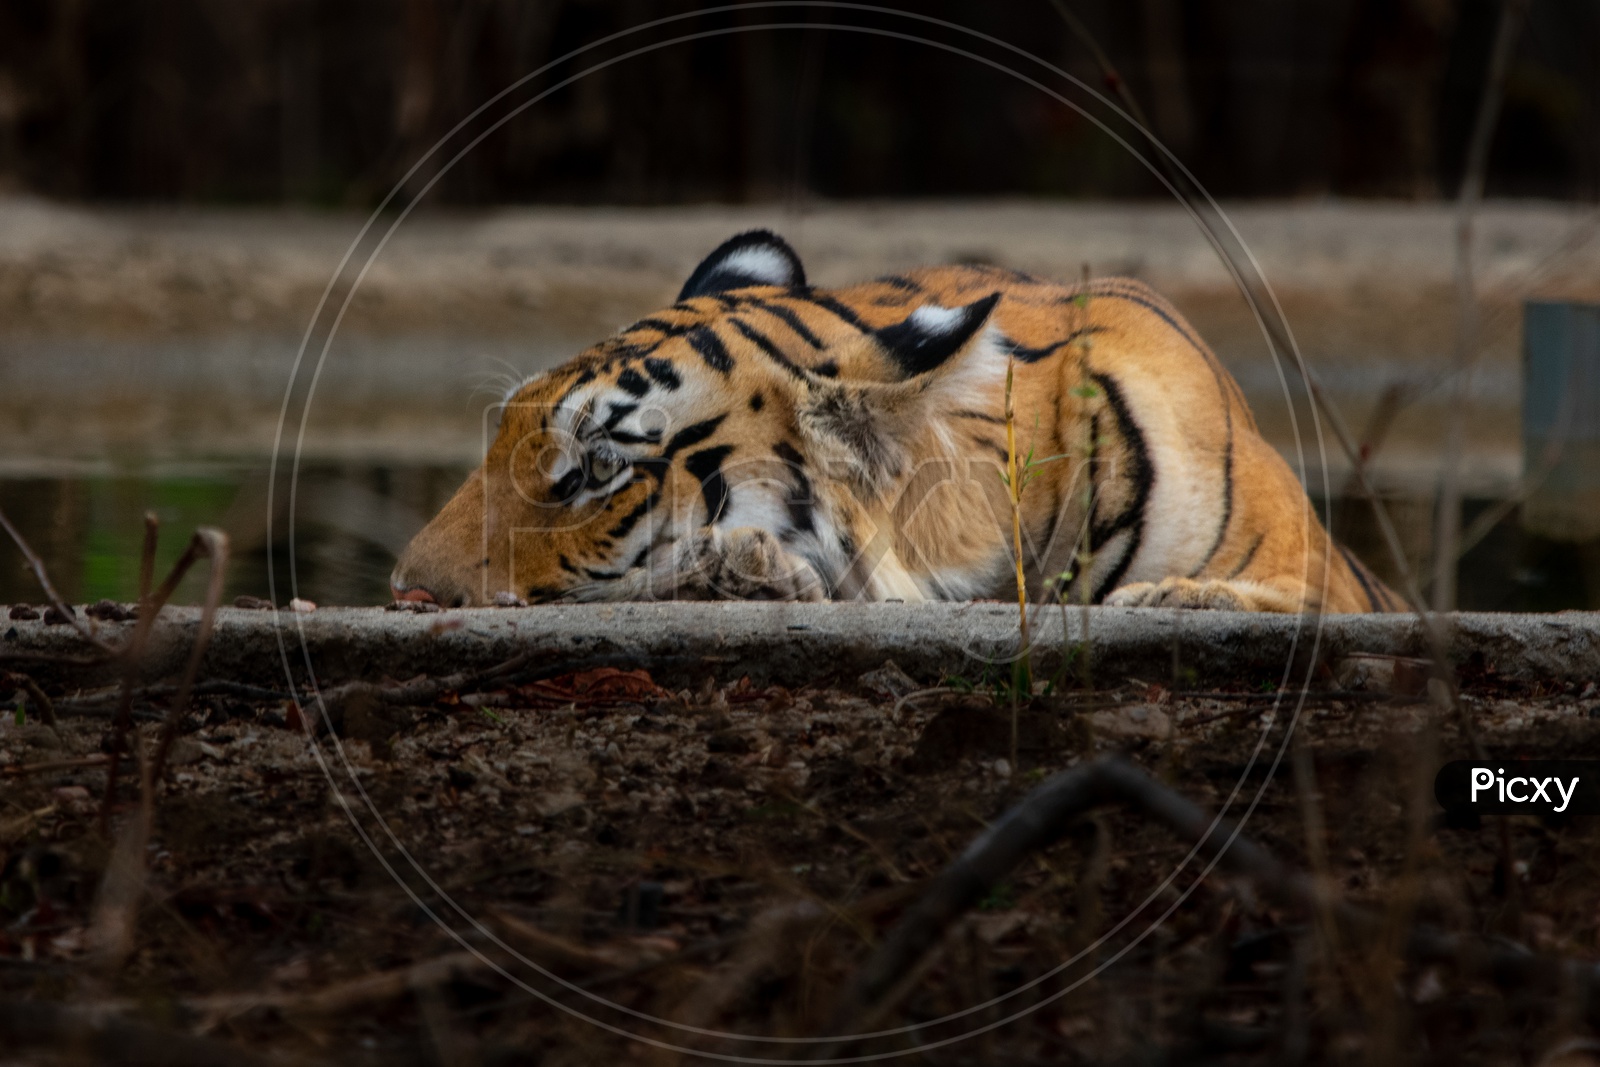 Tiger Or Wild Cat